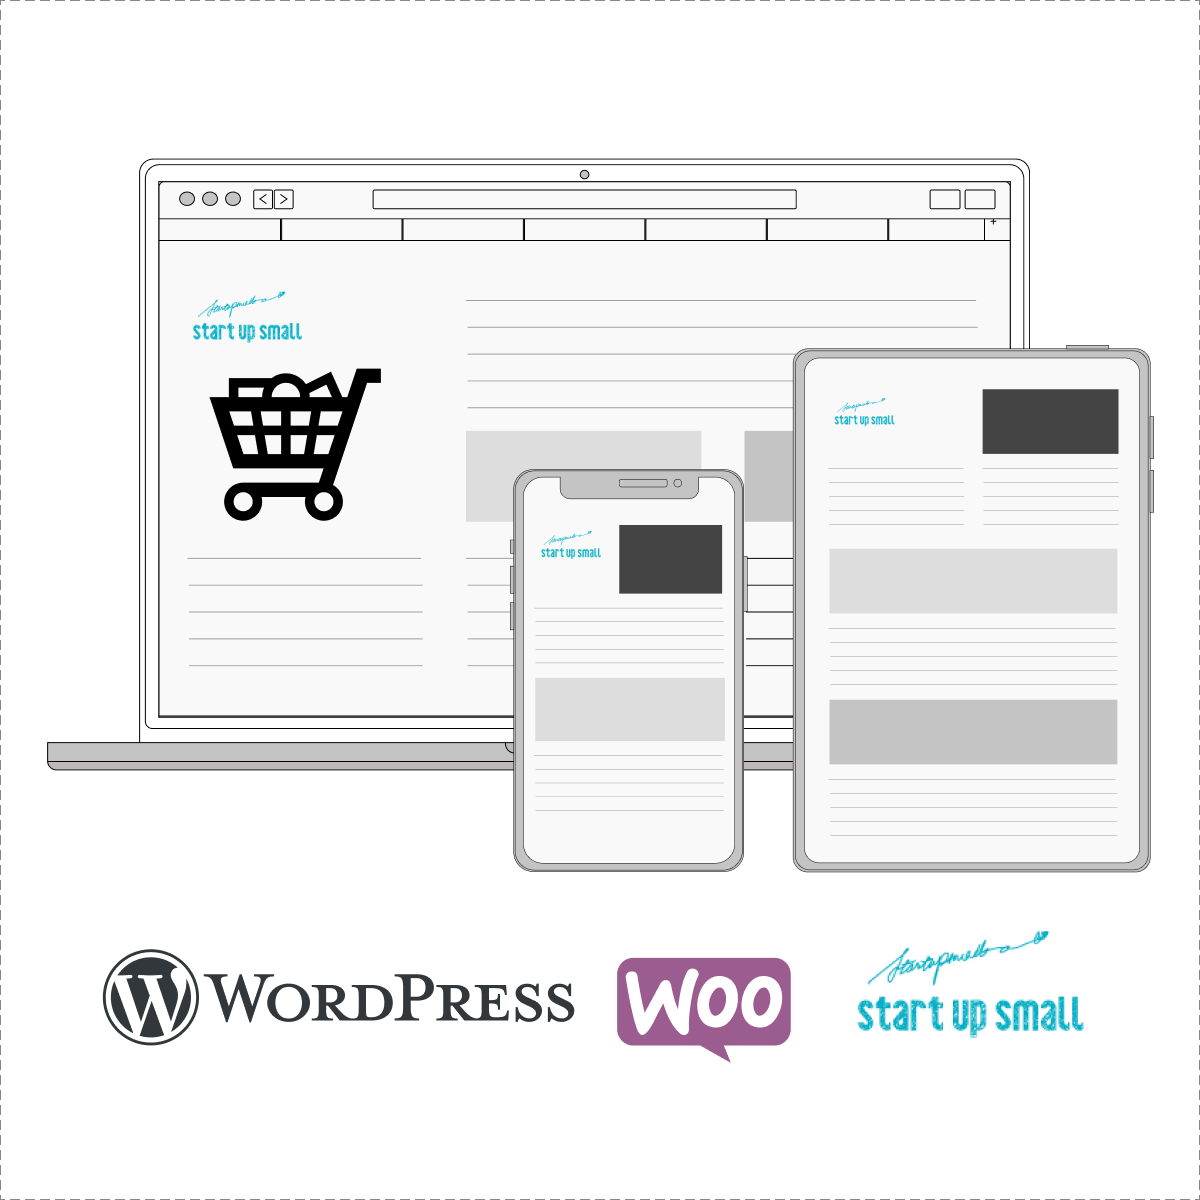 Wordpress eCommerce Website Design and Development Service